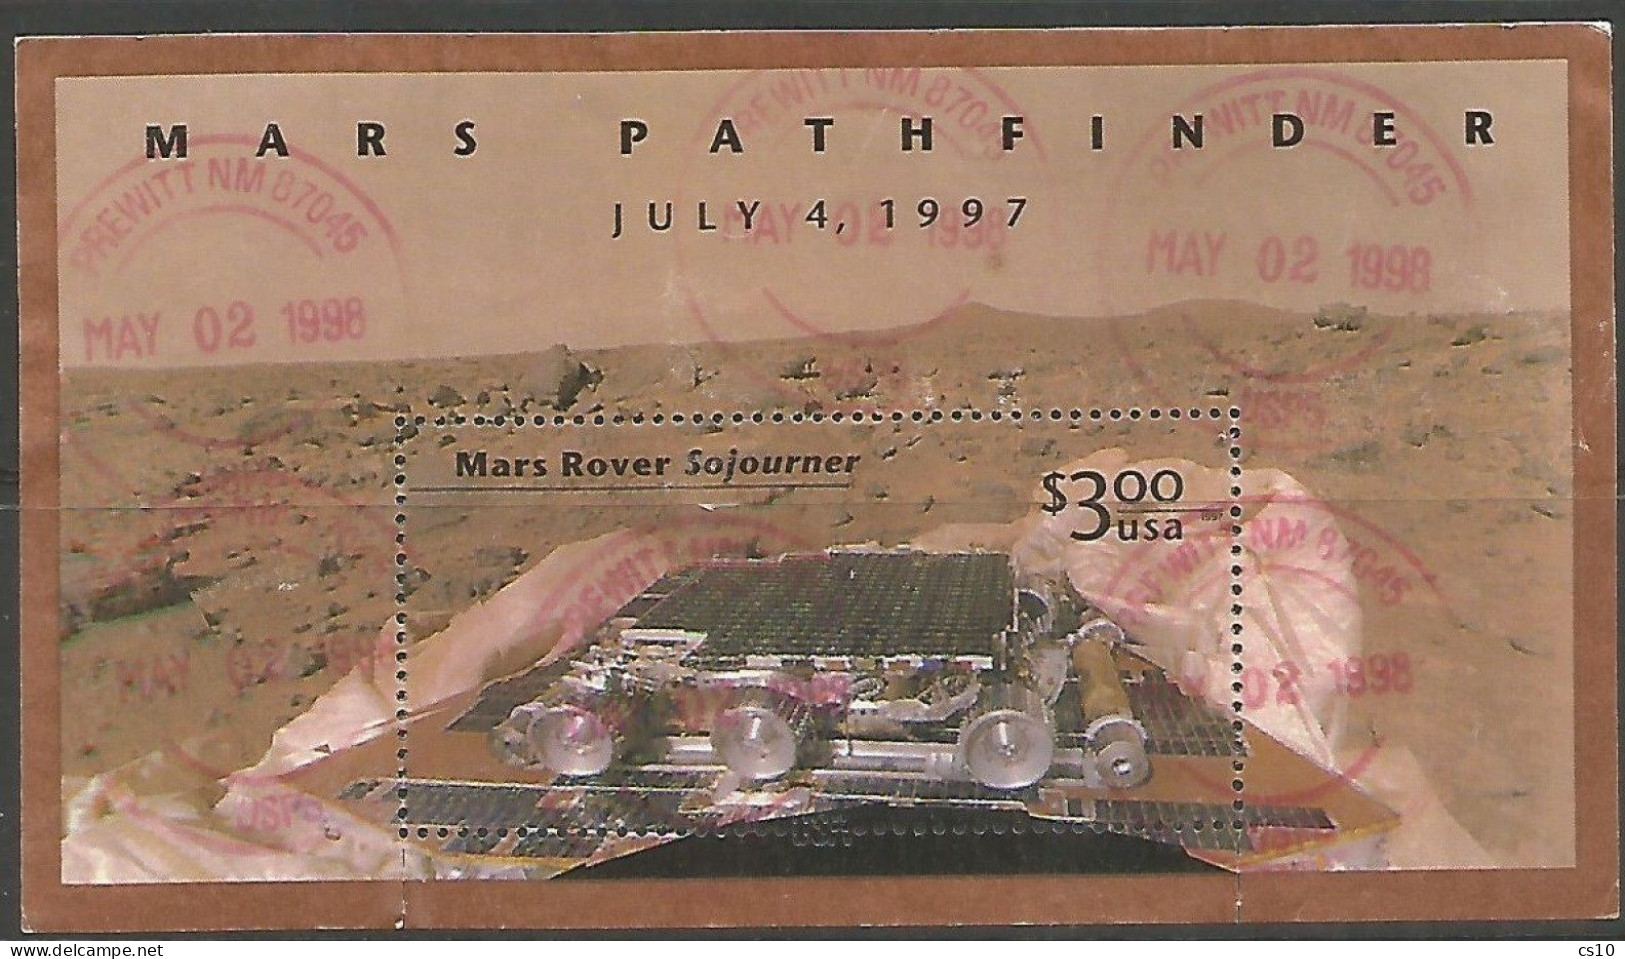 USA 1997 Mars Pathfinder SC.# 3178 S/S Postally Used (1998) Postally Used - VFU Condition - Etats-Unis